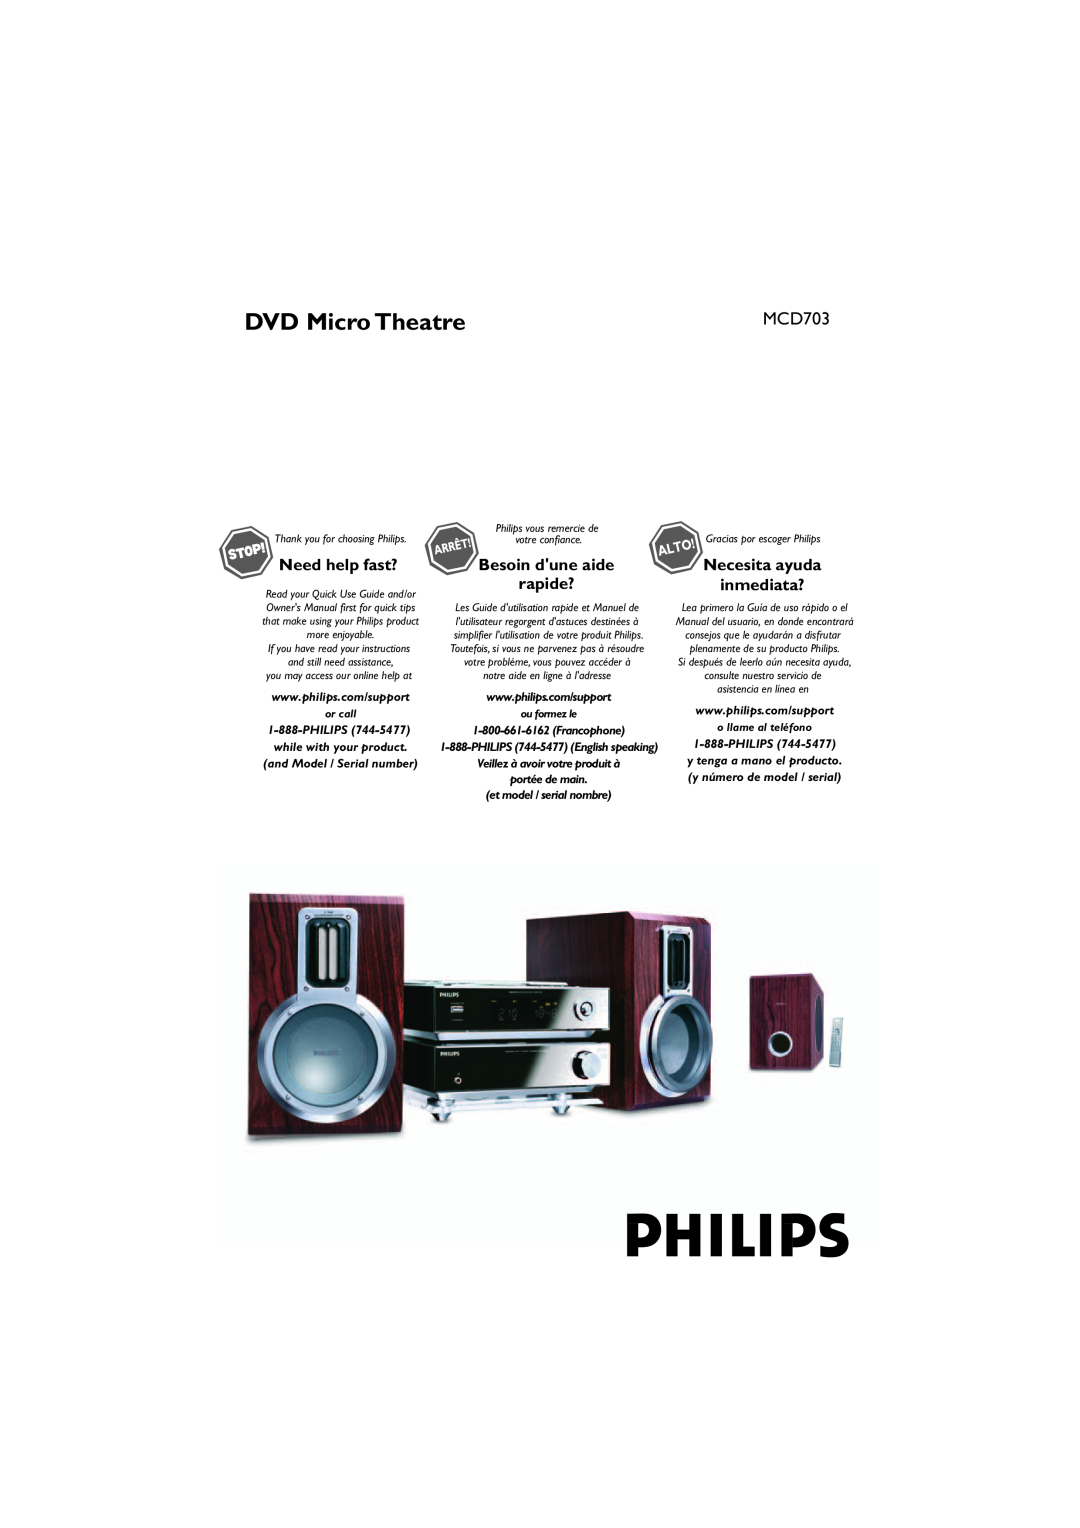 Philips MCD703 owner manual DVD Micro Theatre, Besoin dune aide, Necesita ayuda inmediata?, Need help fast?, rapide? 